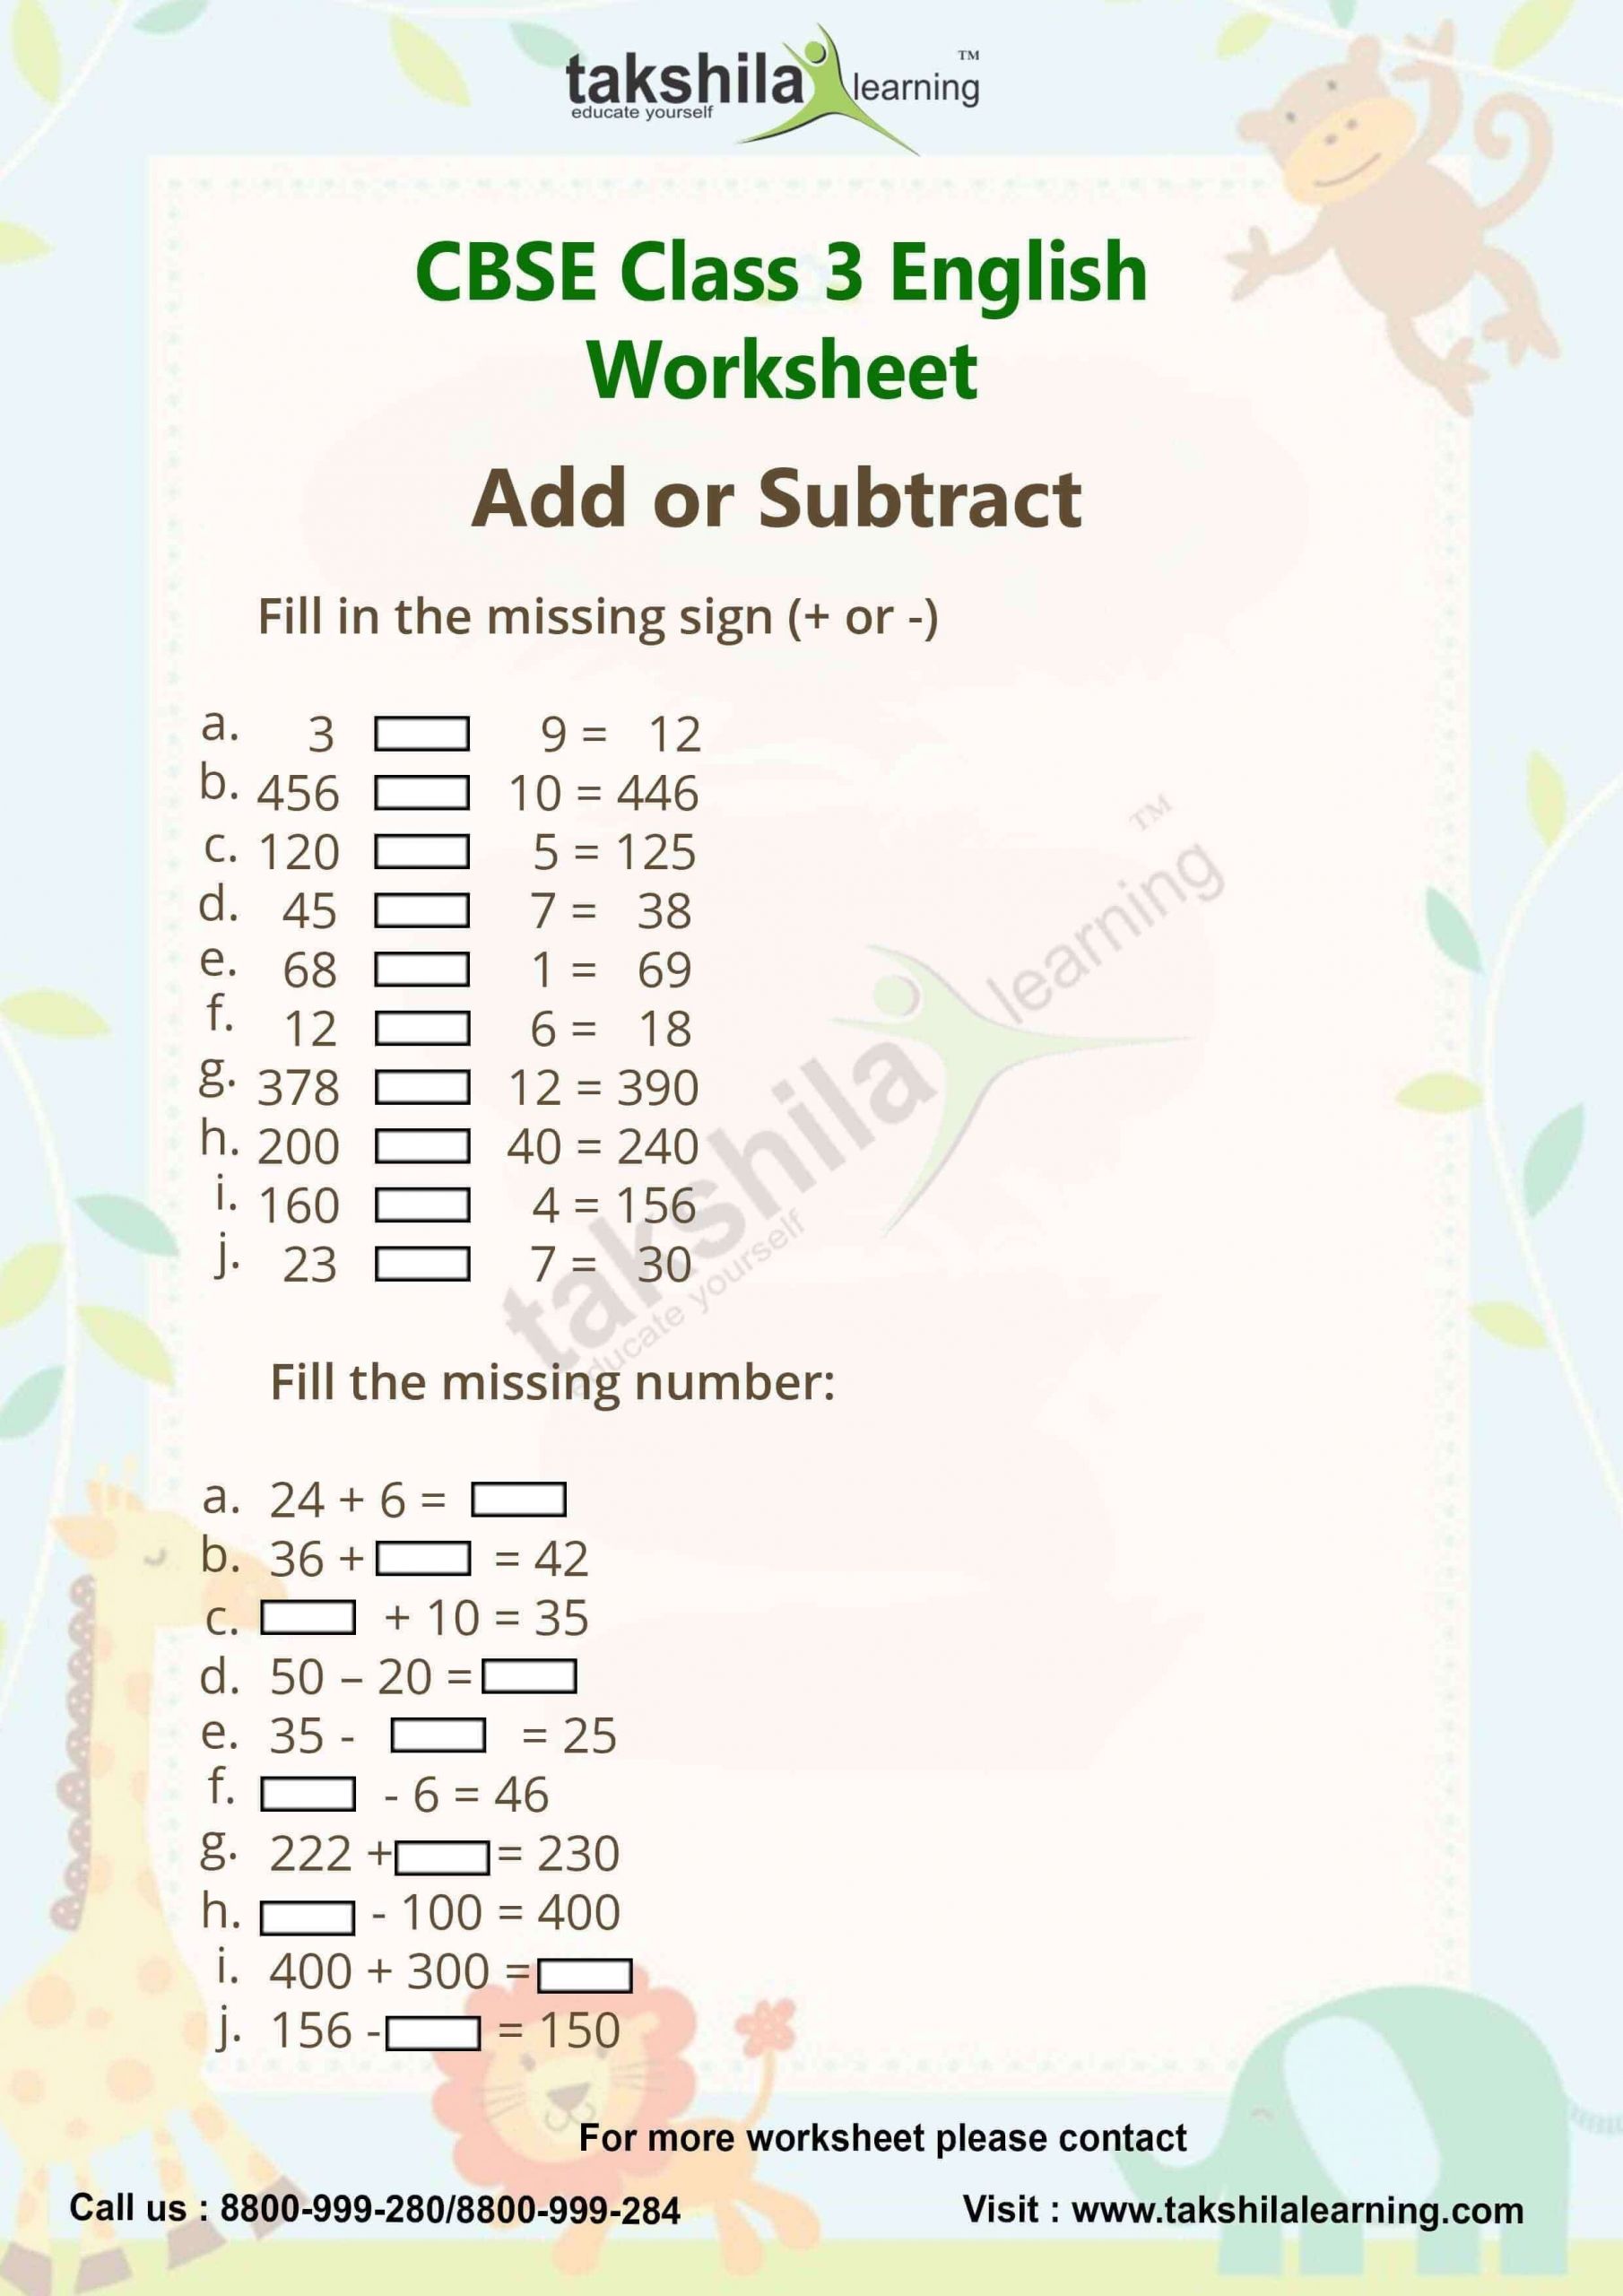 Free Math Worksheets Third Grade 3 Subtraction Subtract Borrow Across 2 Zeros